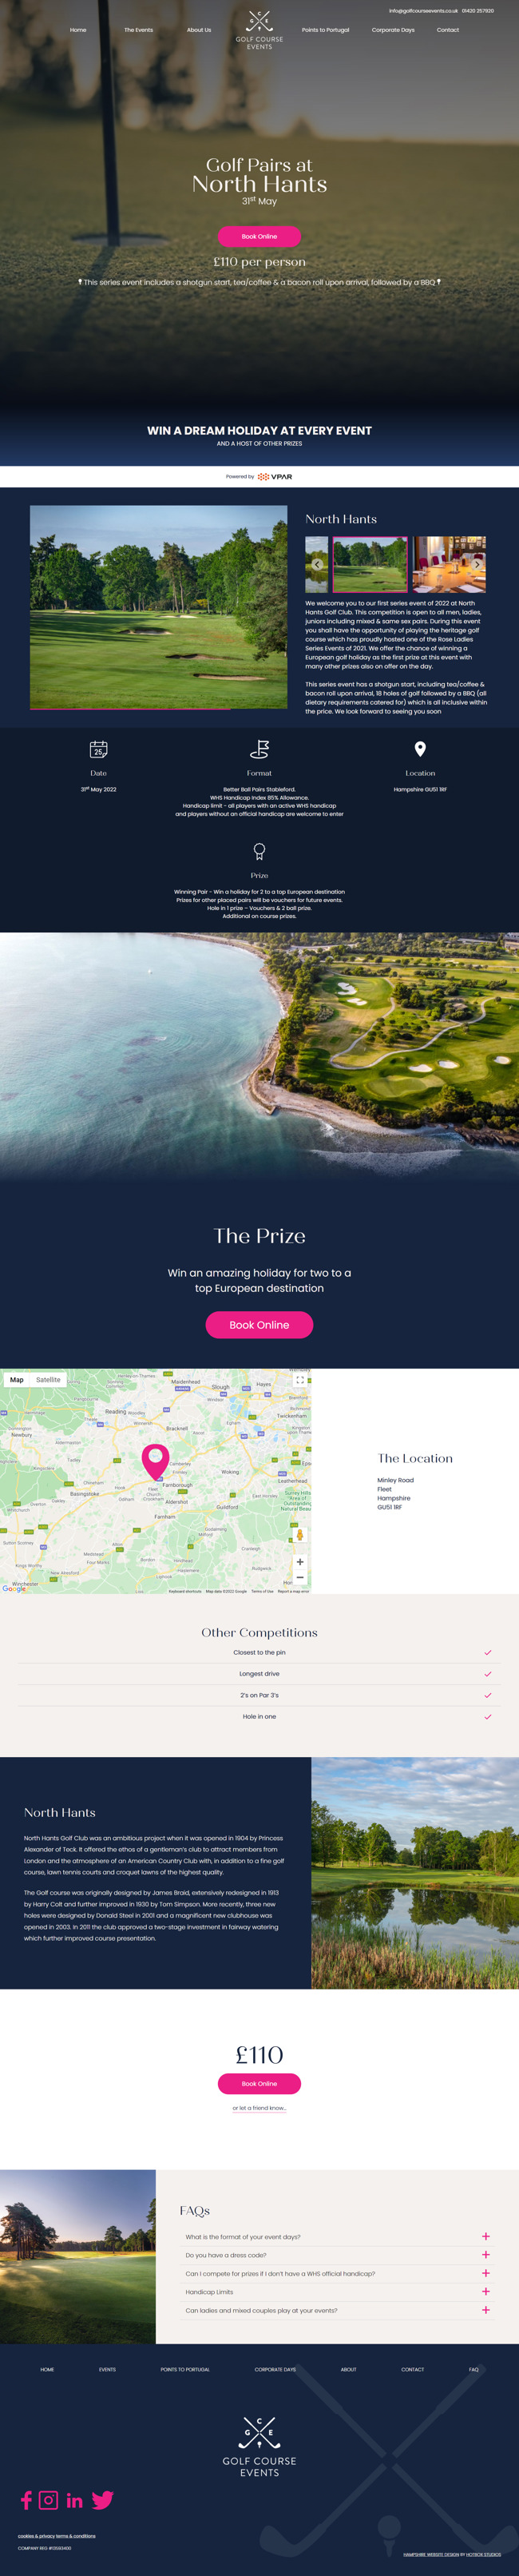 Golf Course Events Website Design And Wordpress Web Development SP003 North Hants